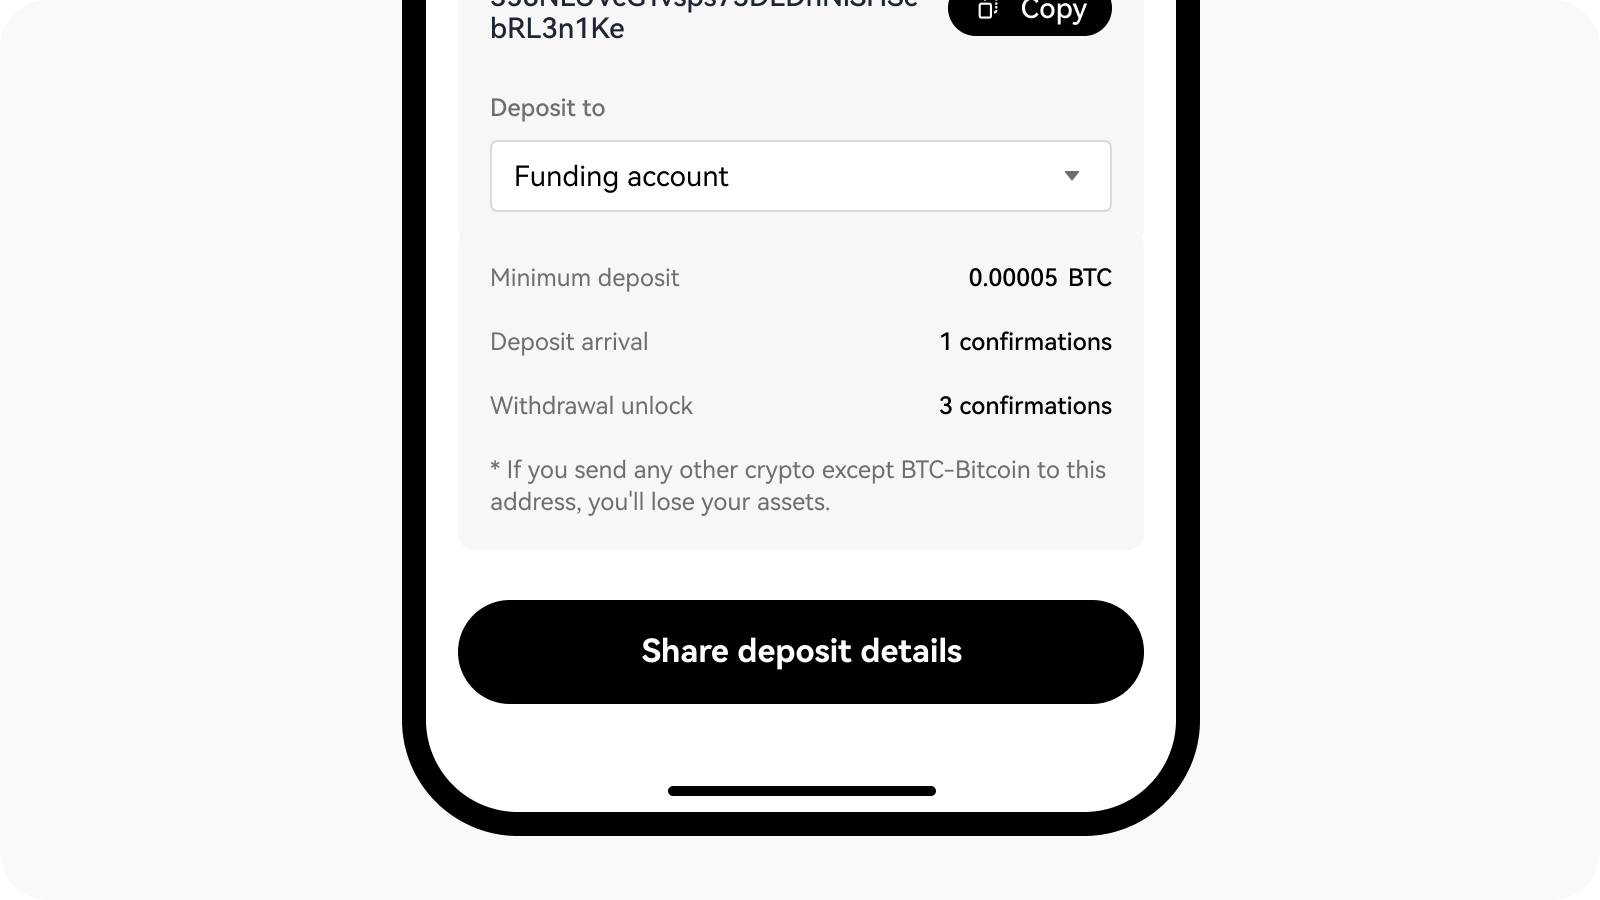 App deposit details